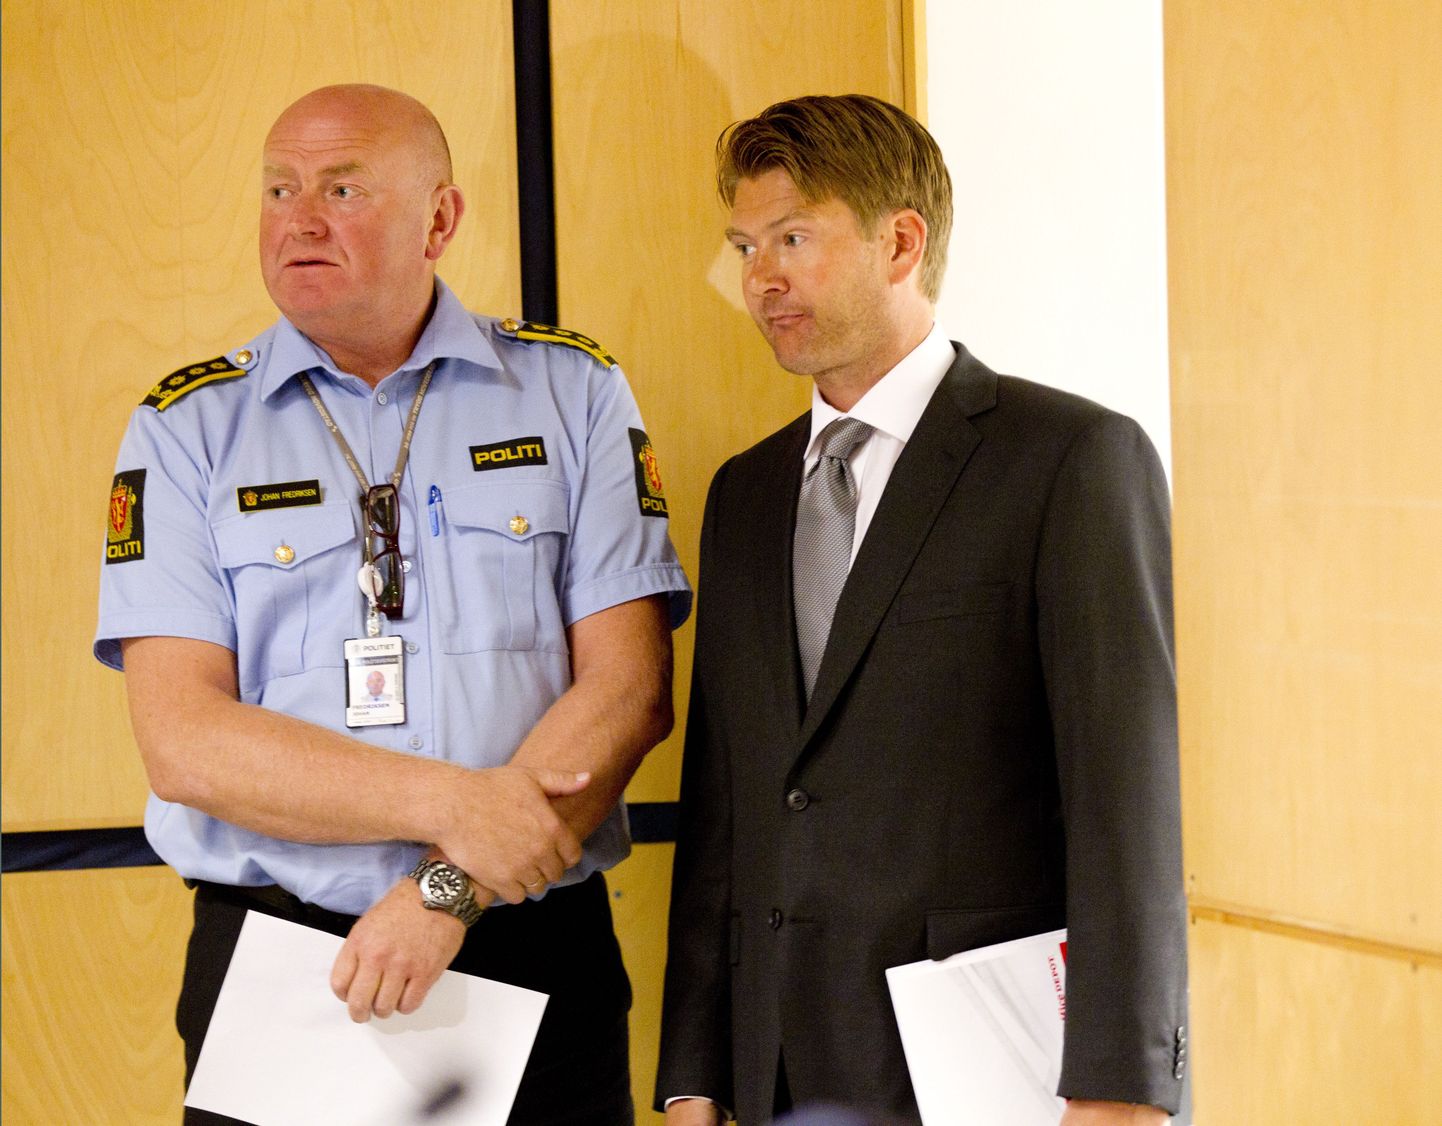 Norra politseiülem Johan Fredriksen (vasakul) ja prokurör Christian Hatlo.